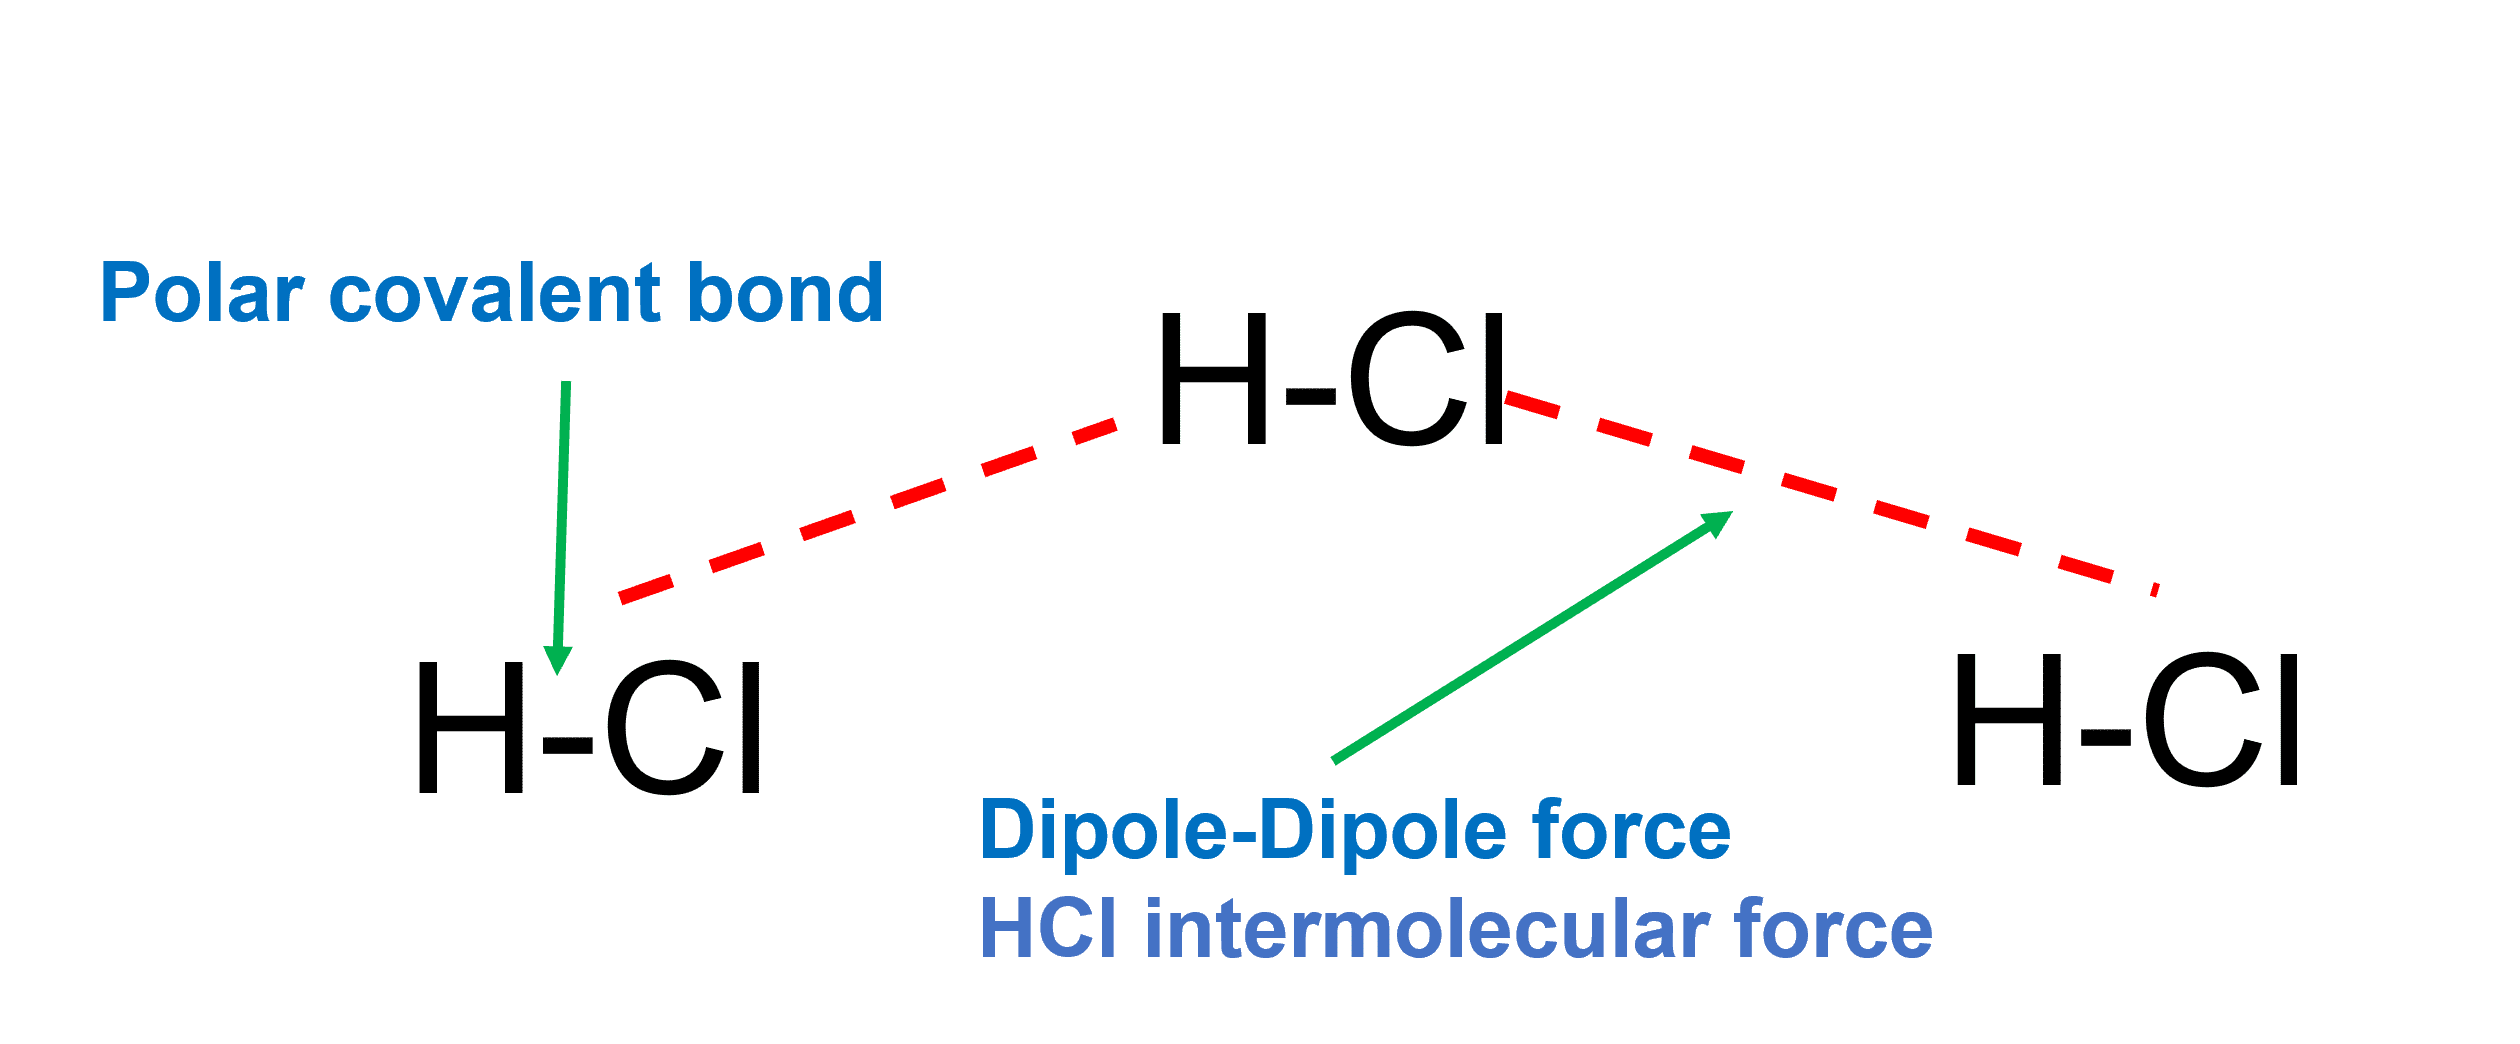 hcl-intermolecular-forces-diagram-1